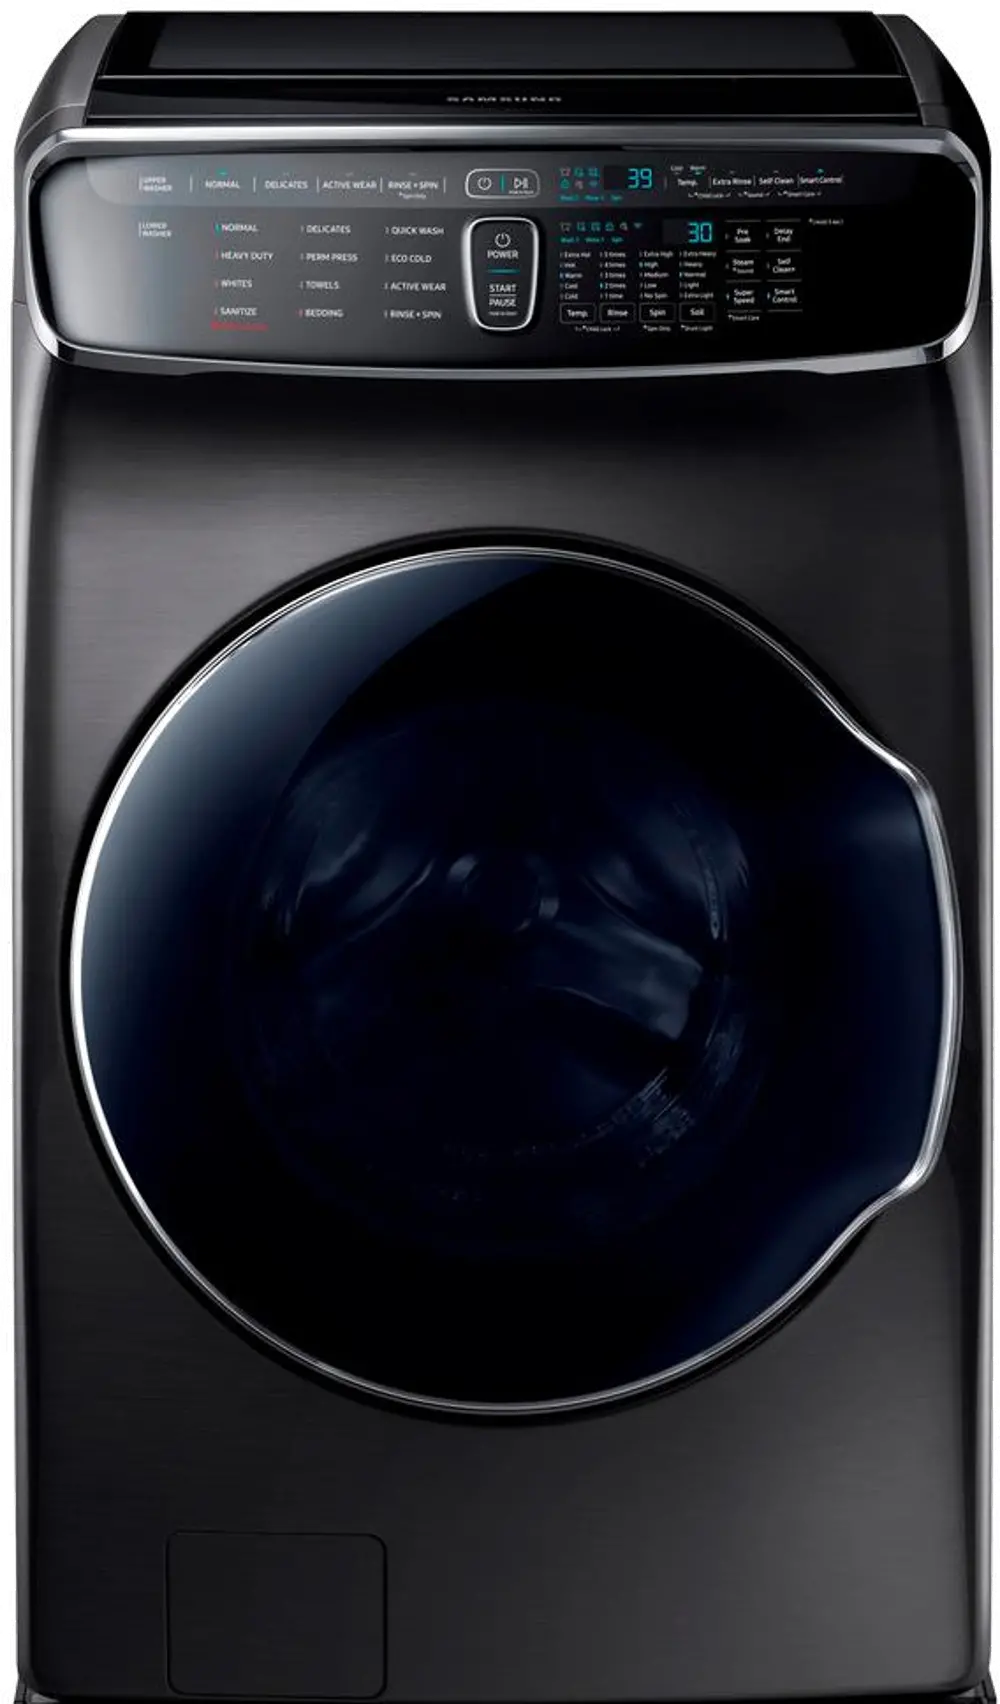 WV60M9900AV Samsung  FlexWash Top Load Washer - 6.0 cu. ft. Black Stainless Steel-1